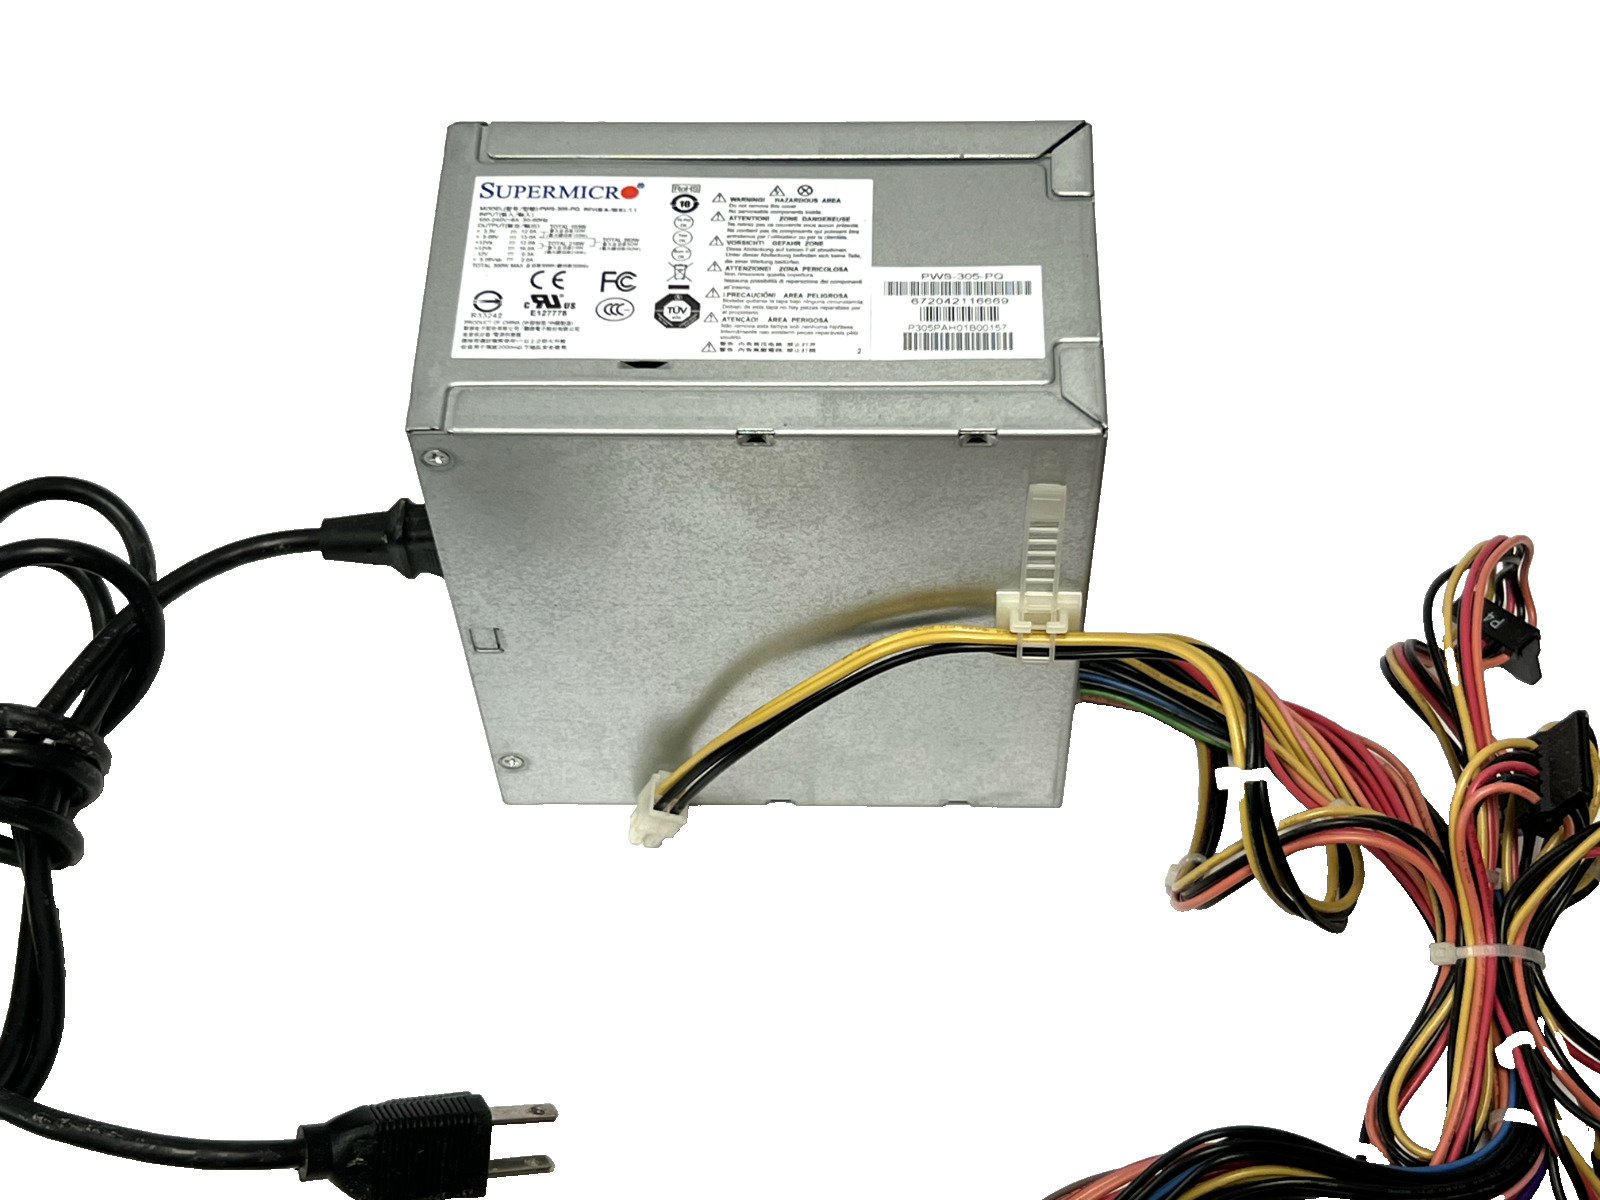 Supermicro 300W Multi-Output PS2/ATX Power Supply (PWS-305-PQ)